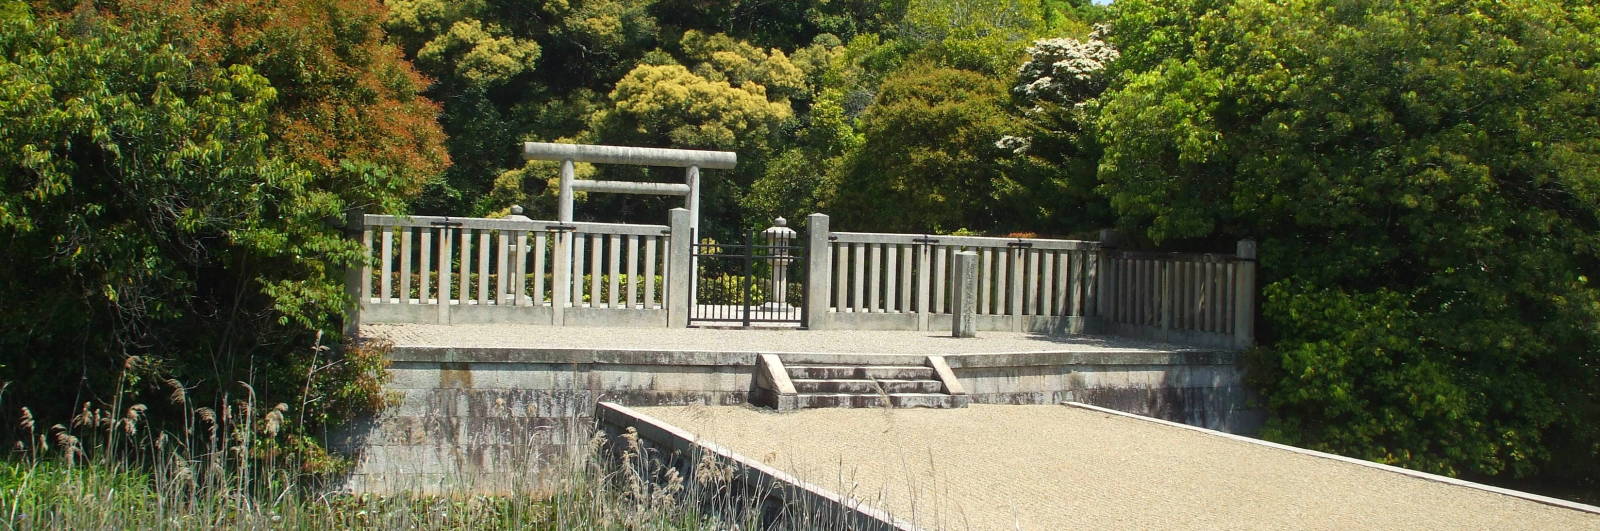 Kofun or burial mound of Princess / Empress Iwa no Hime near Nara, Japan